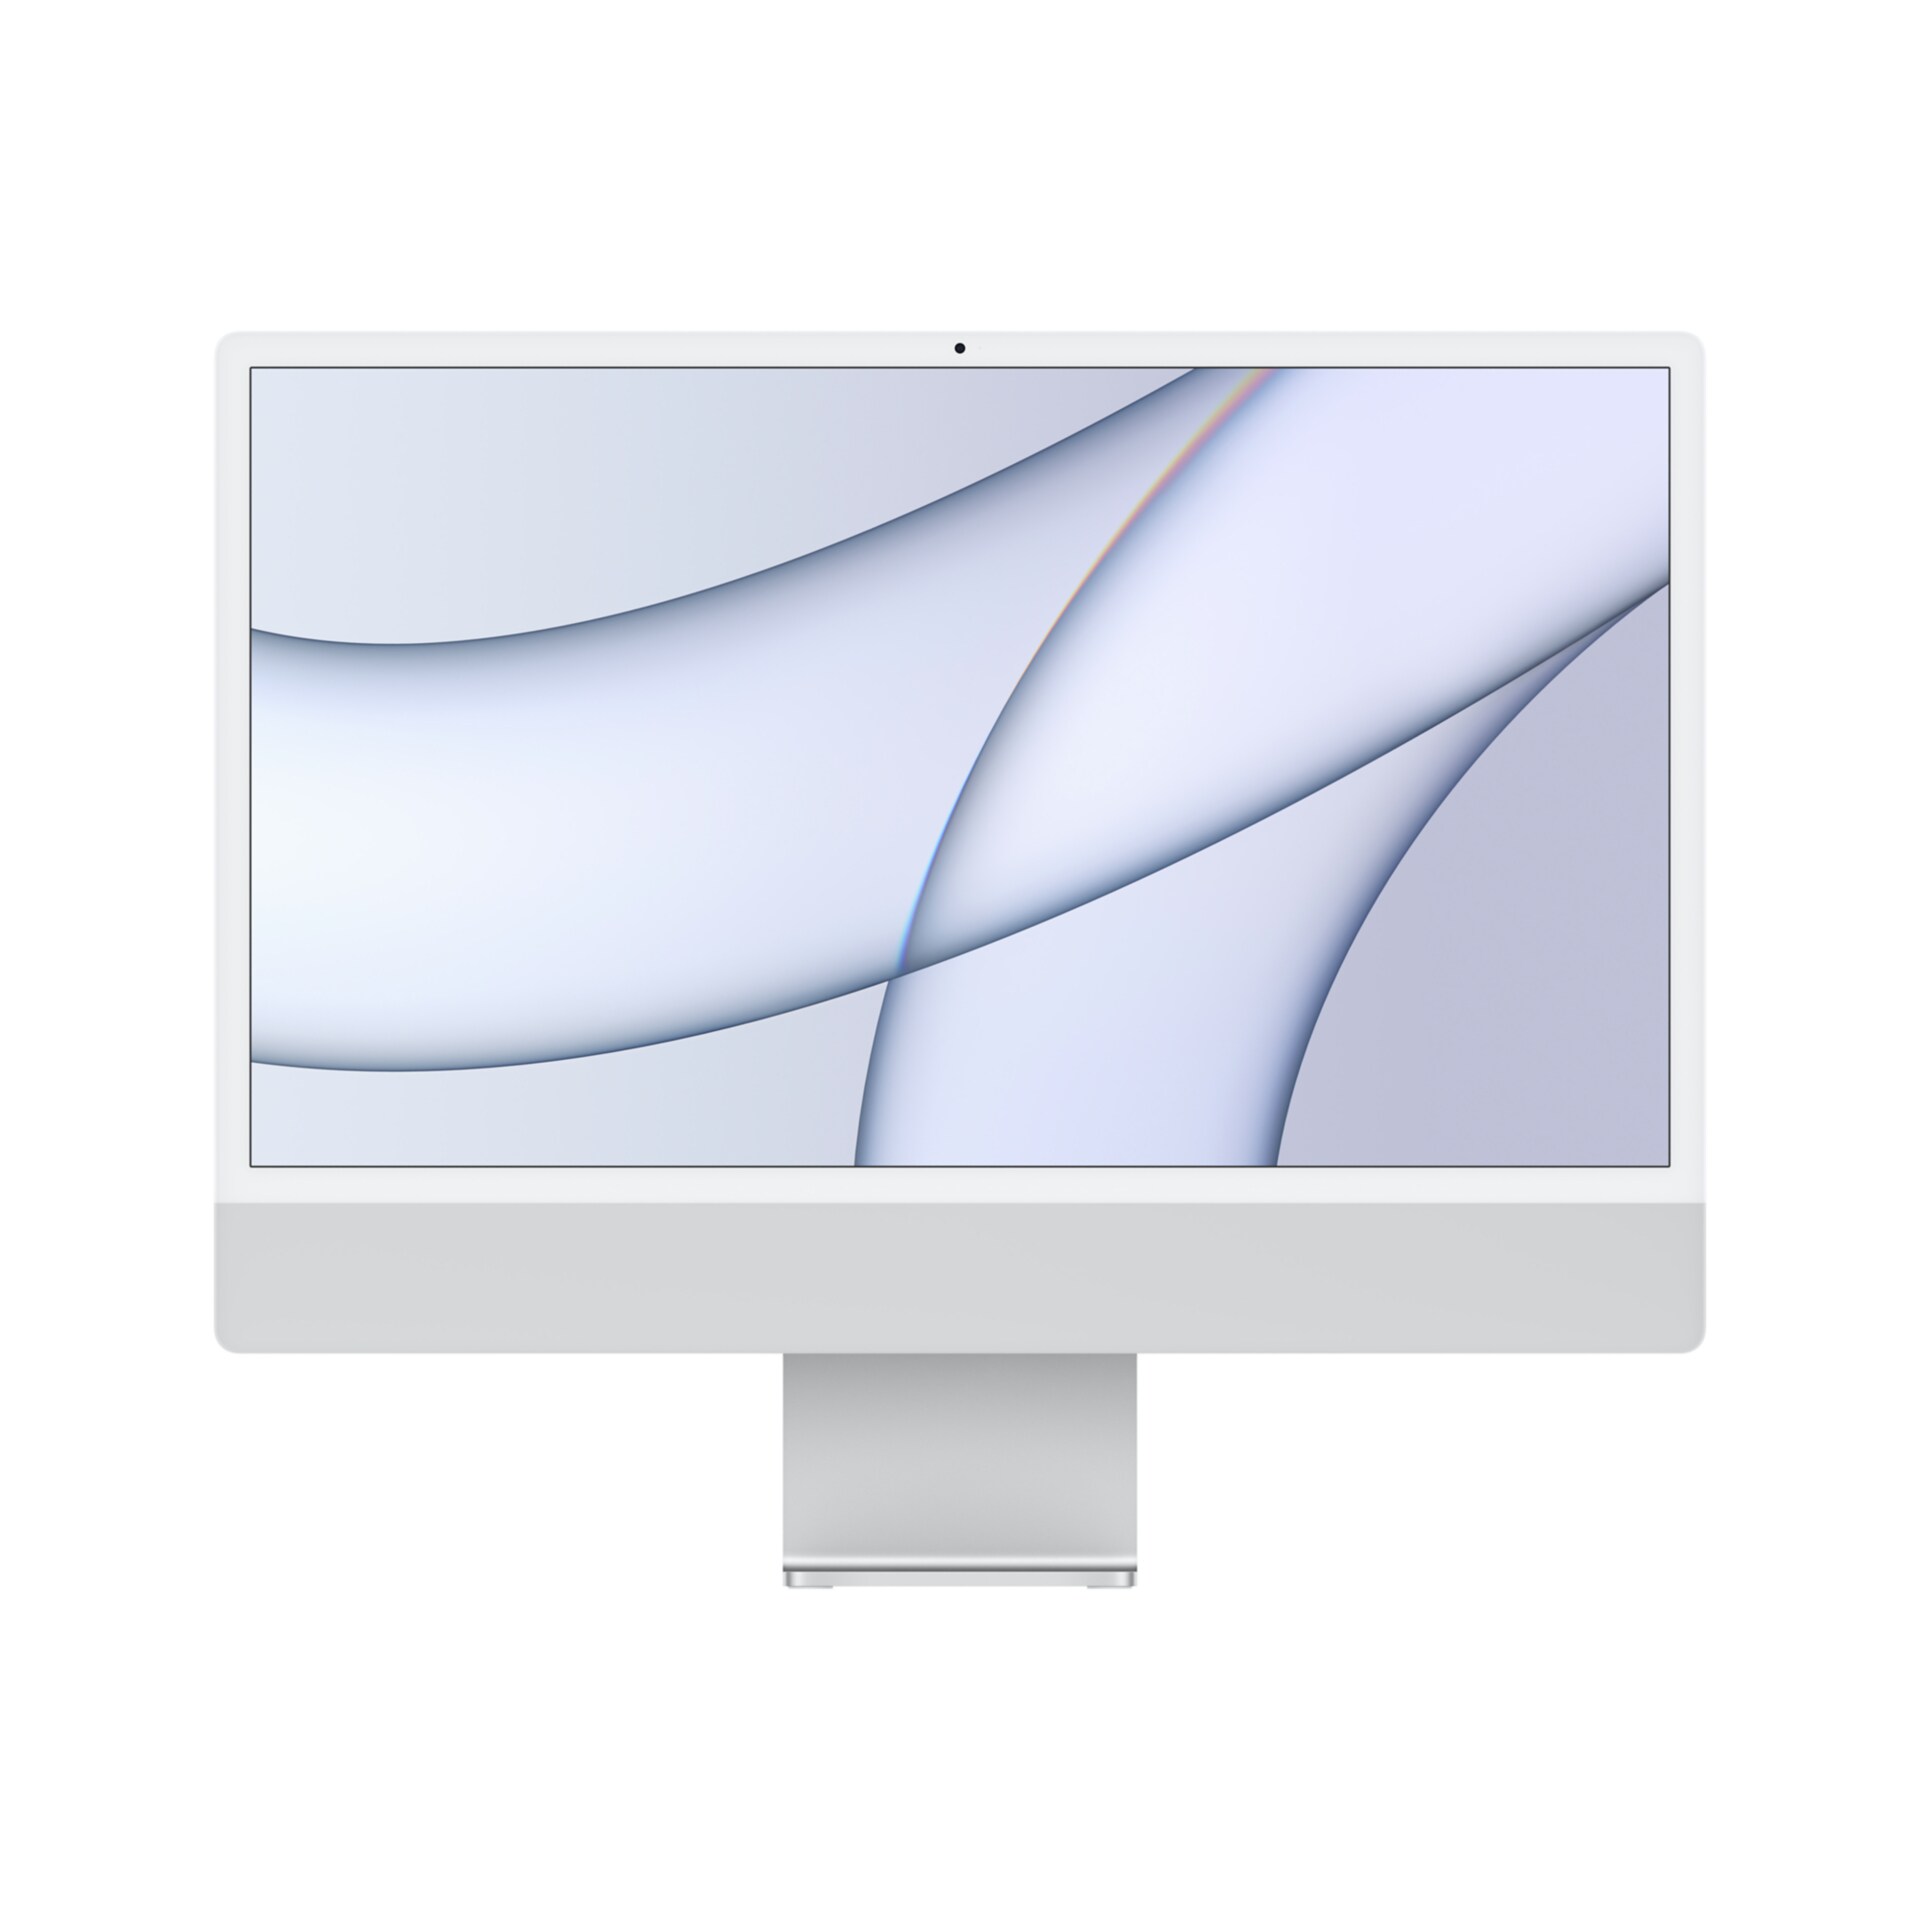 Vandt straf skygge Apple iMac 24" M1 8C7C 16GB RAM 1TB SSD - Silver - Z13K-2002119562 -  All-in-One Computers - CDW.com